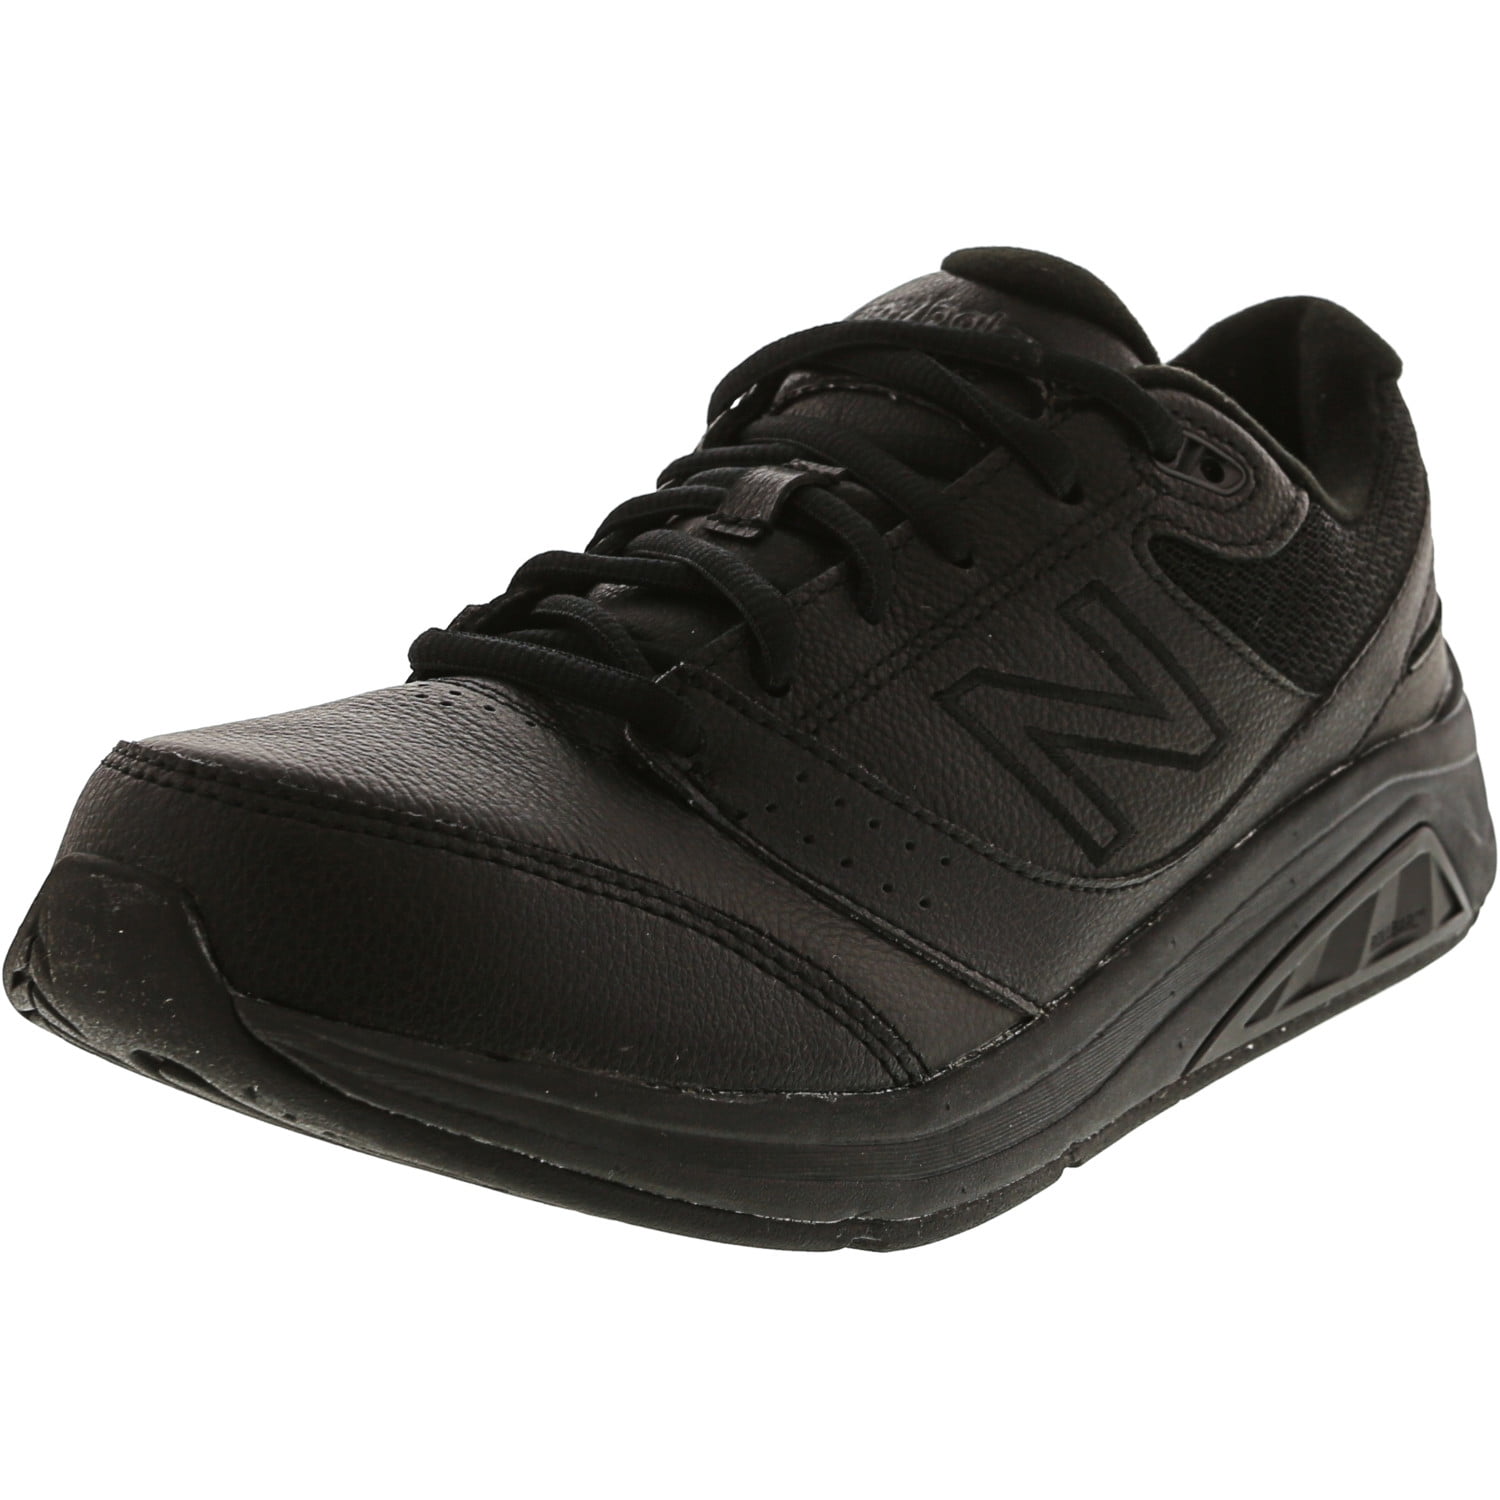 New Balance Women's Ww928 Bk3 Ankle-High Leather Walking Shoe - 6N ...